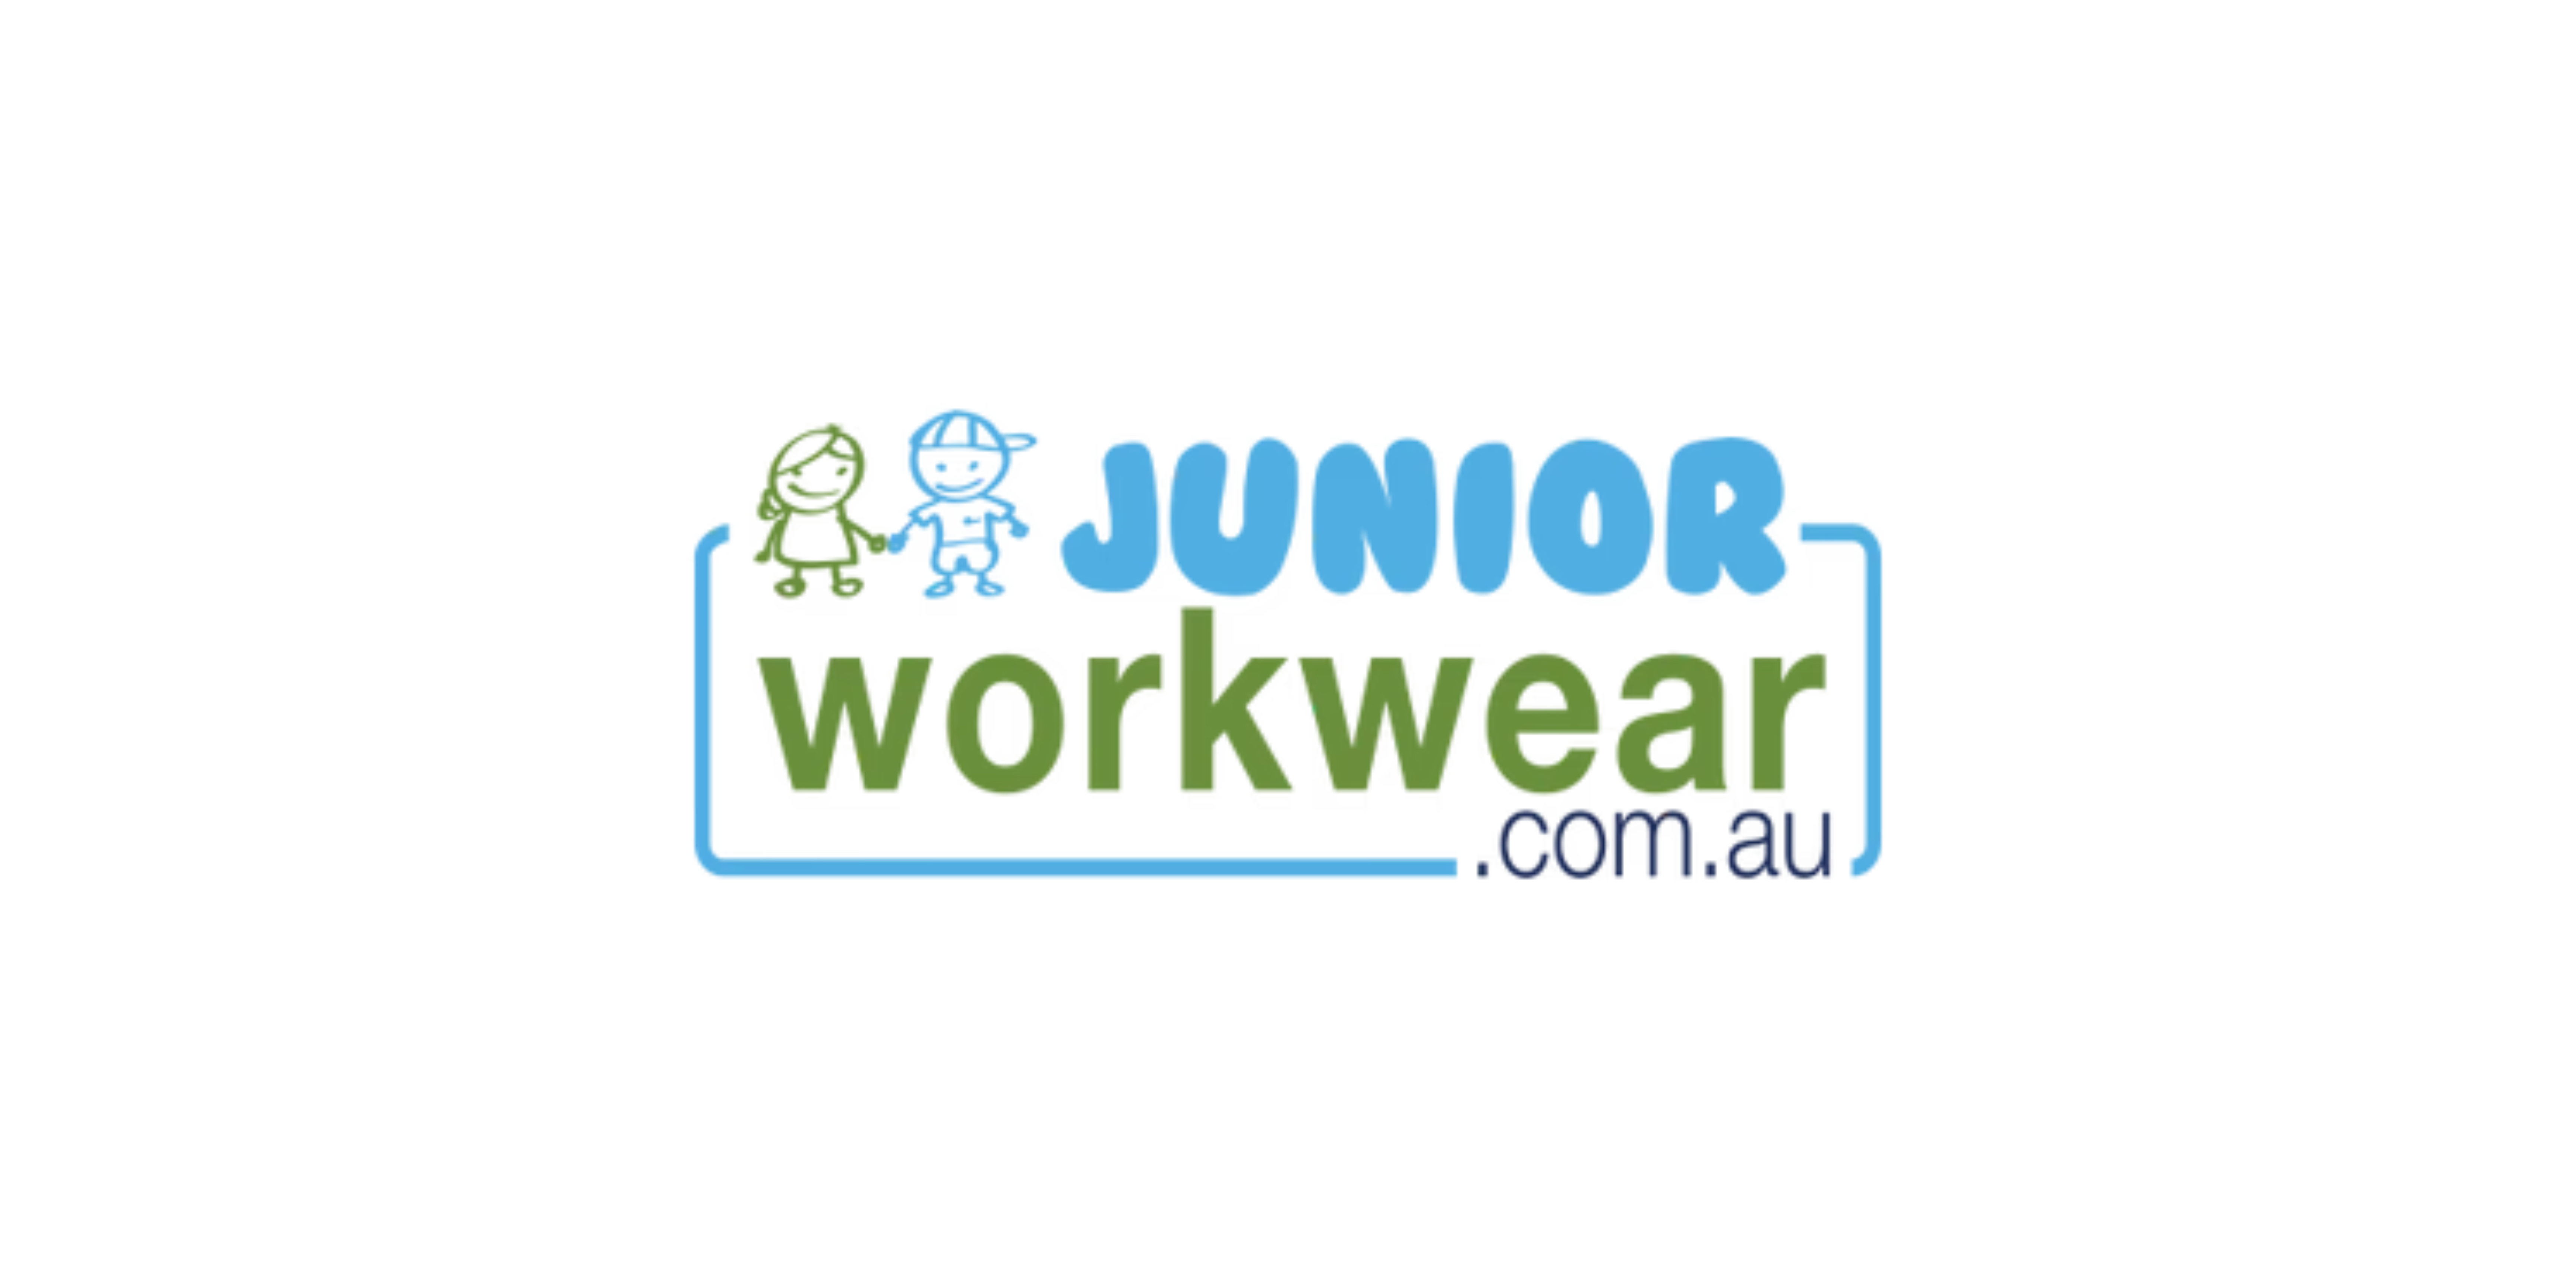 JUNIOR WORKWEAR Cover Image